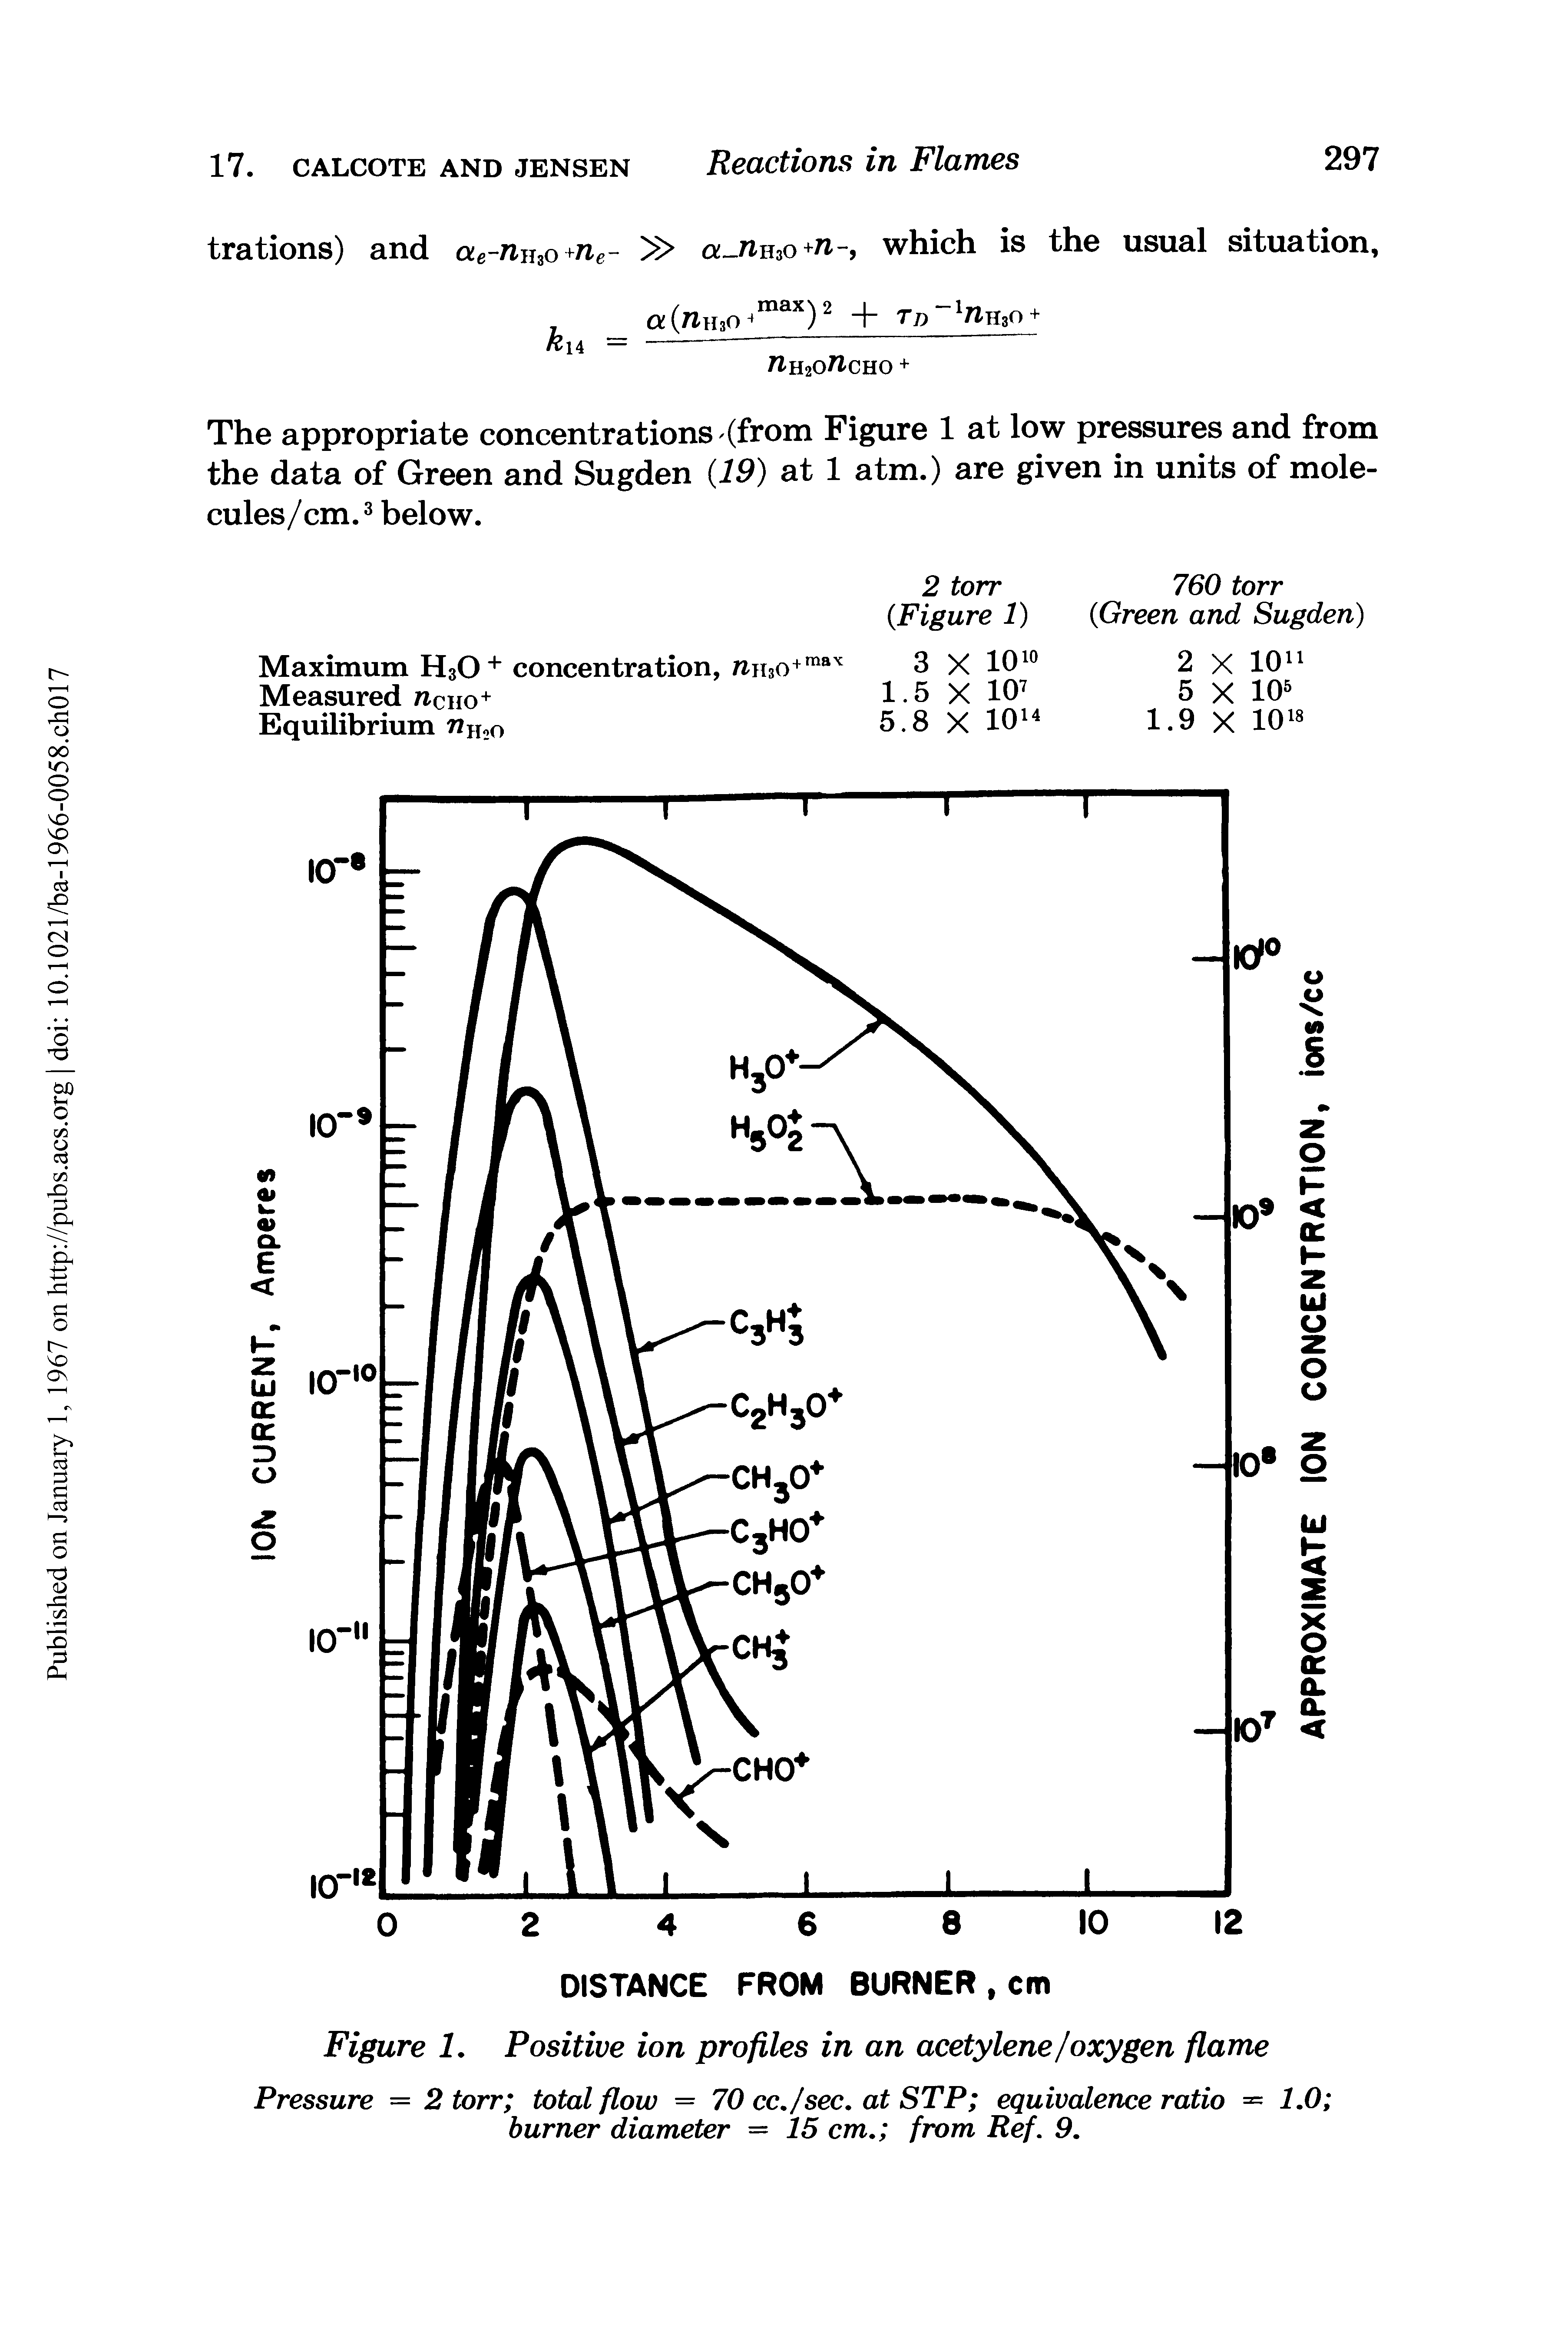 Figure 1. Positive ion profiles in an acetylene/oxygen flame...